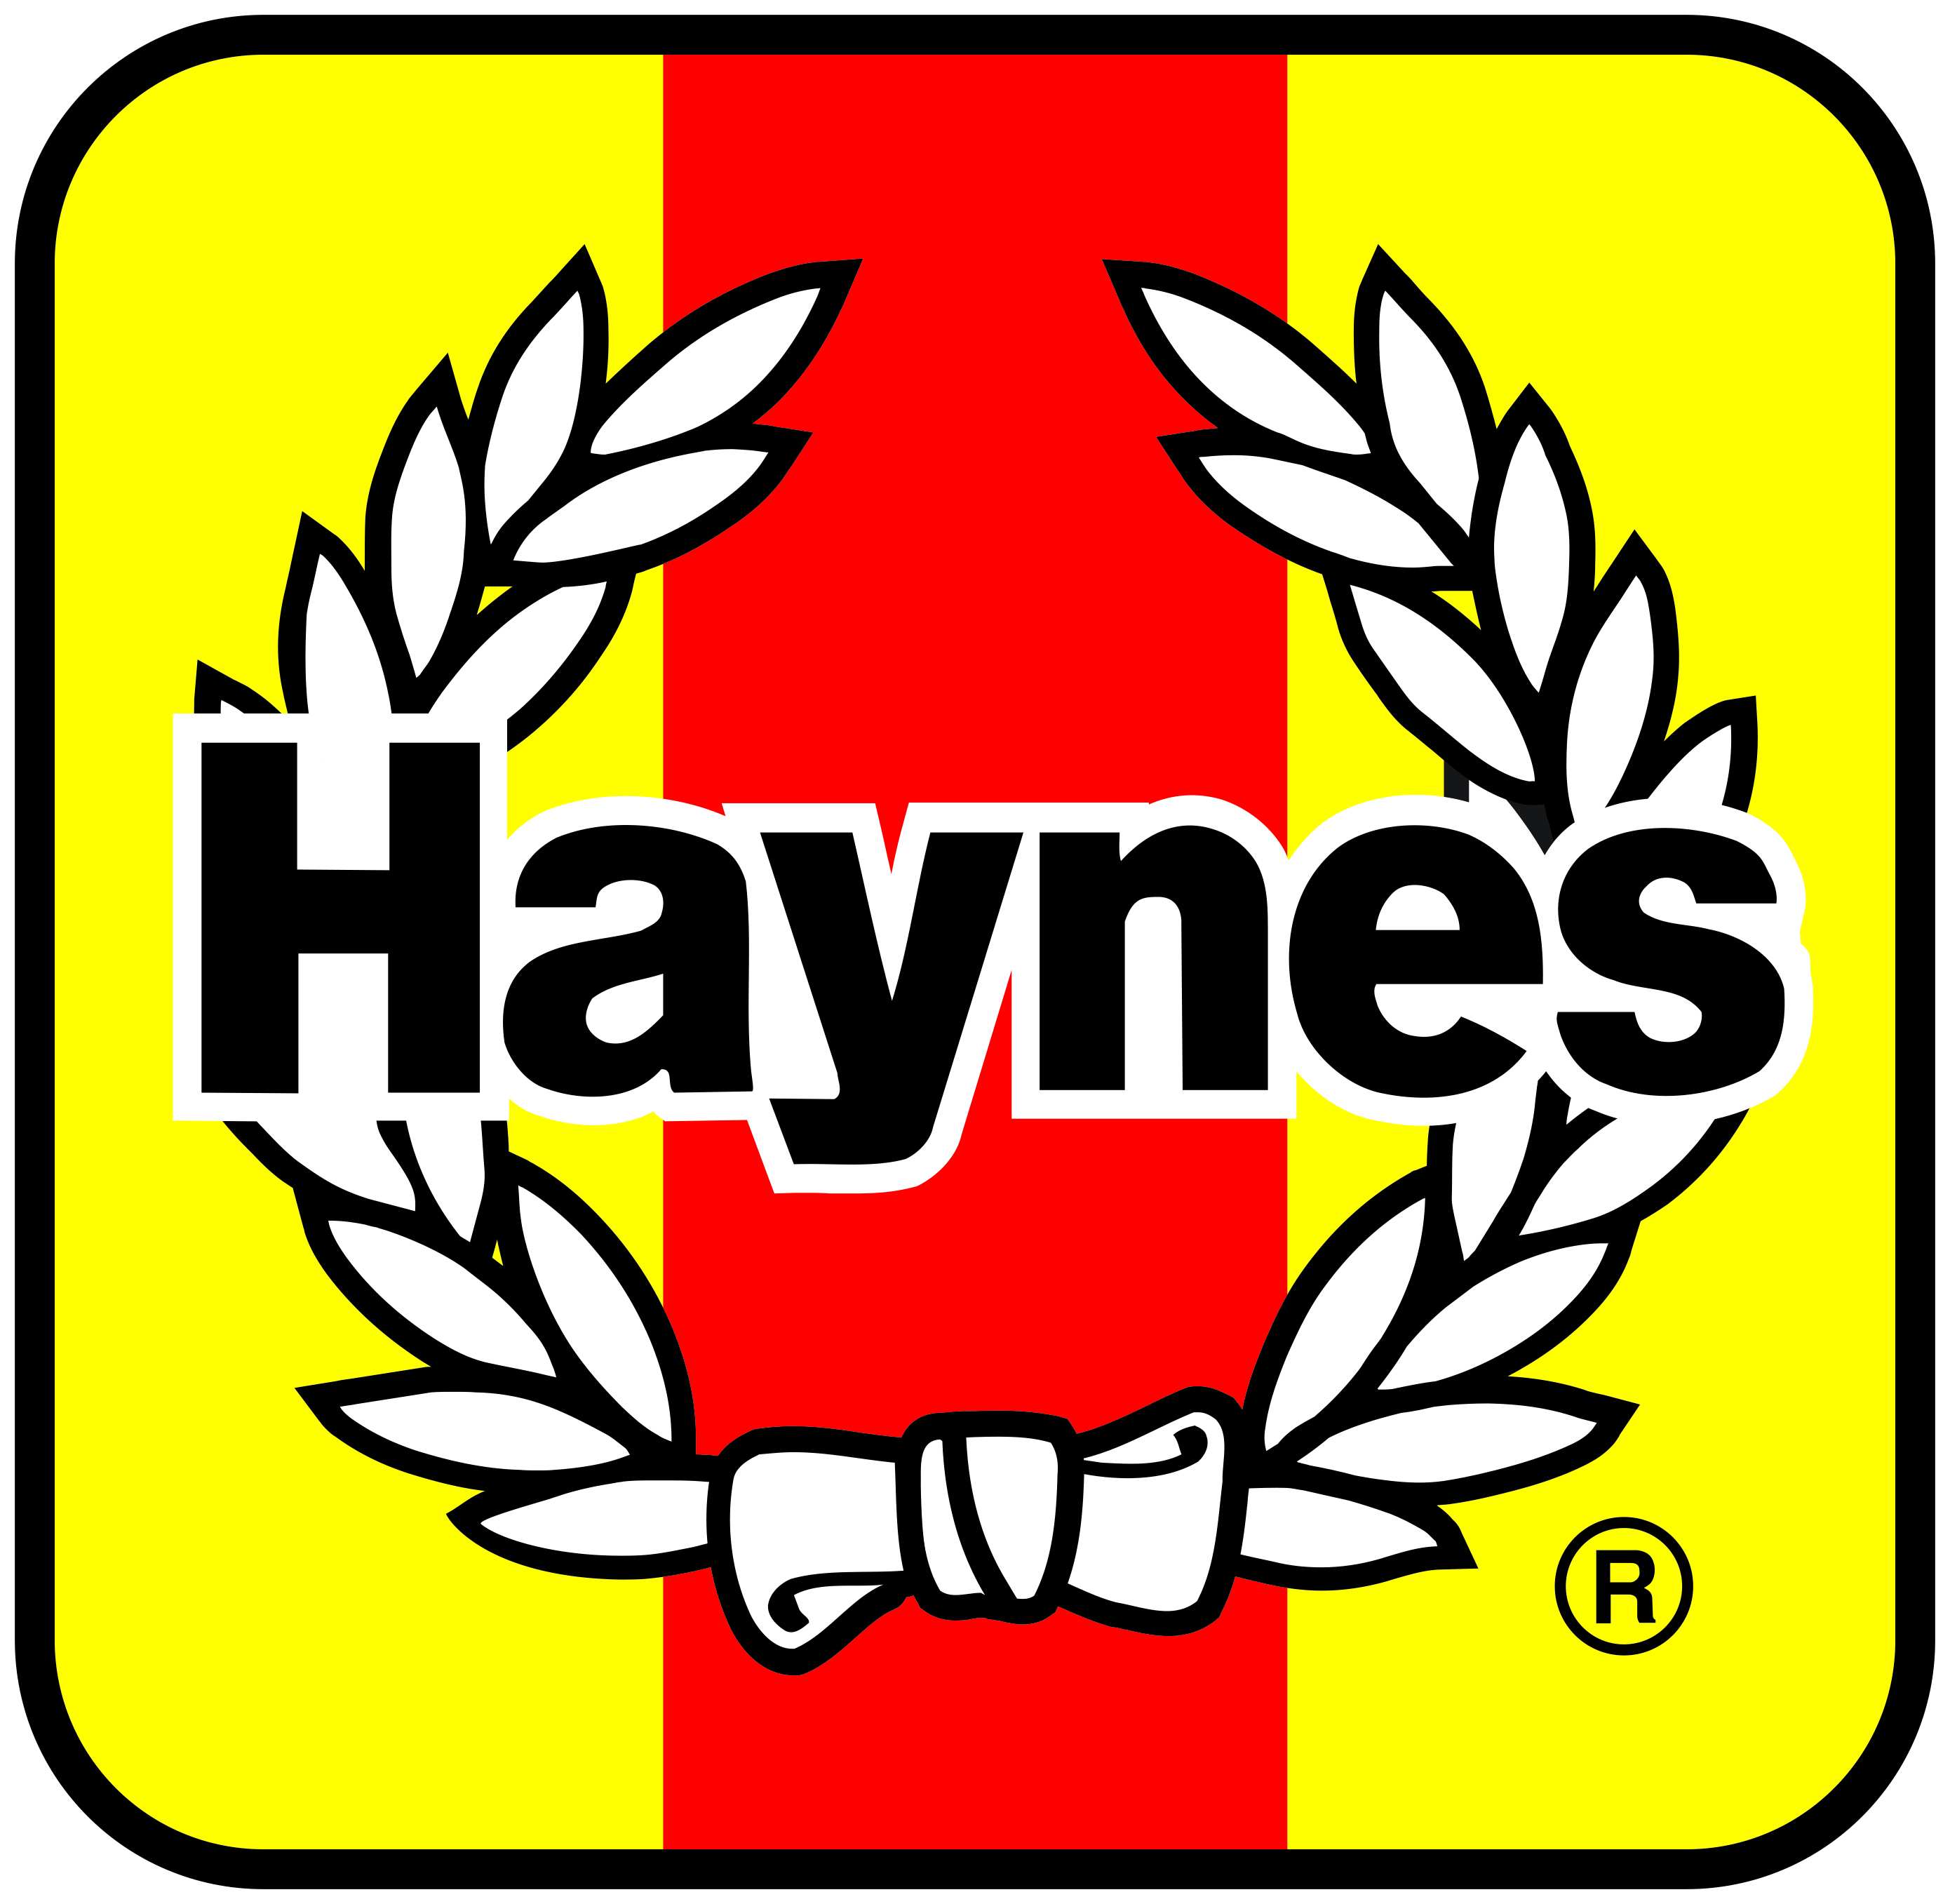 Haynes_logo_black_outline.jpg